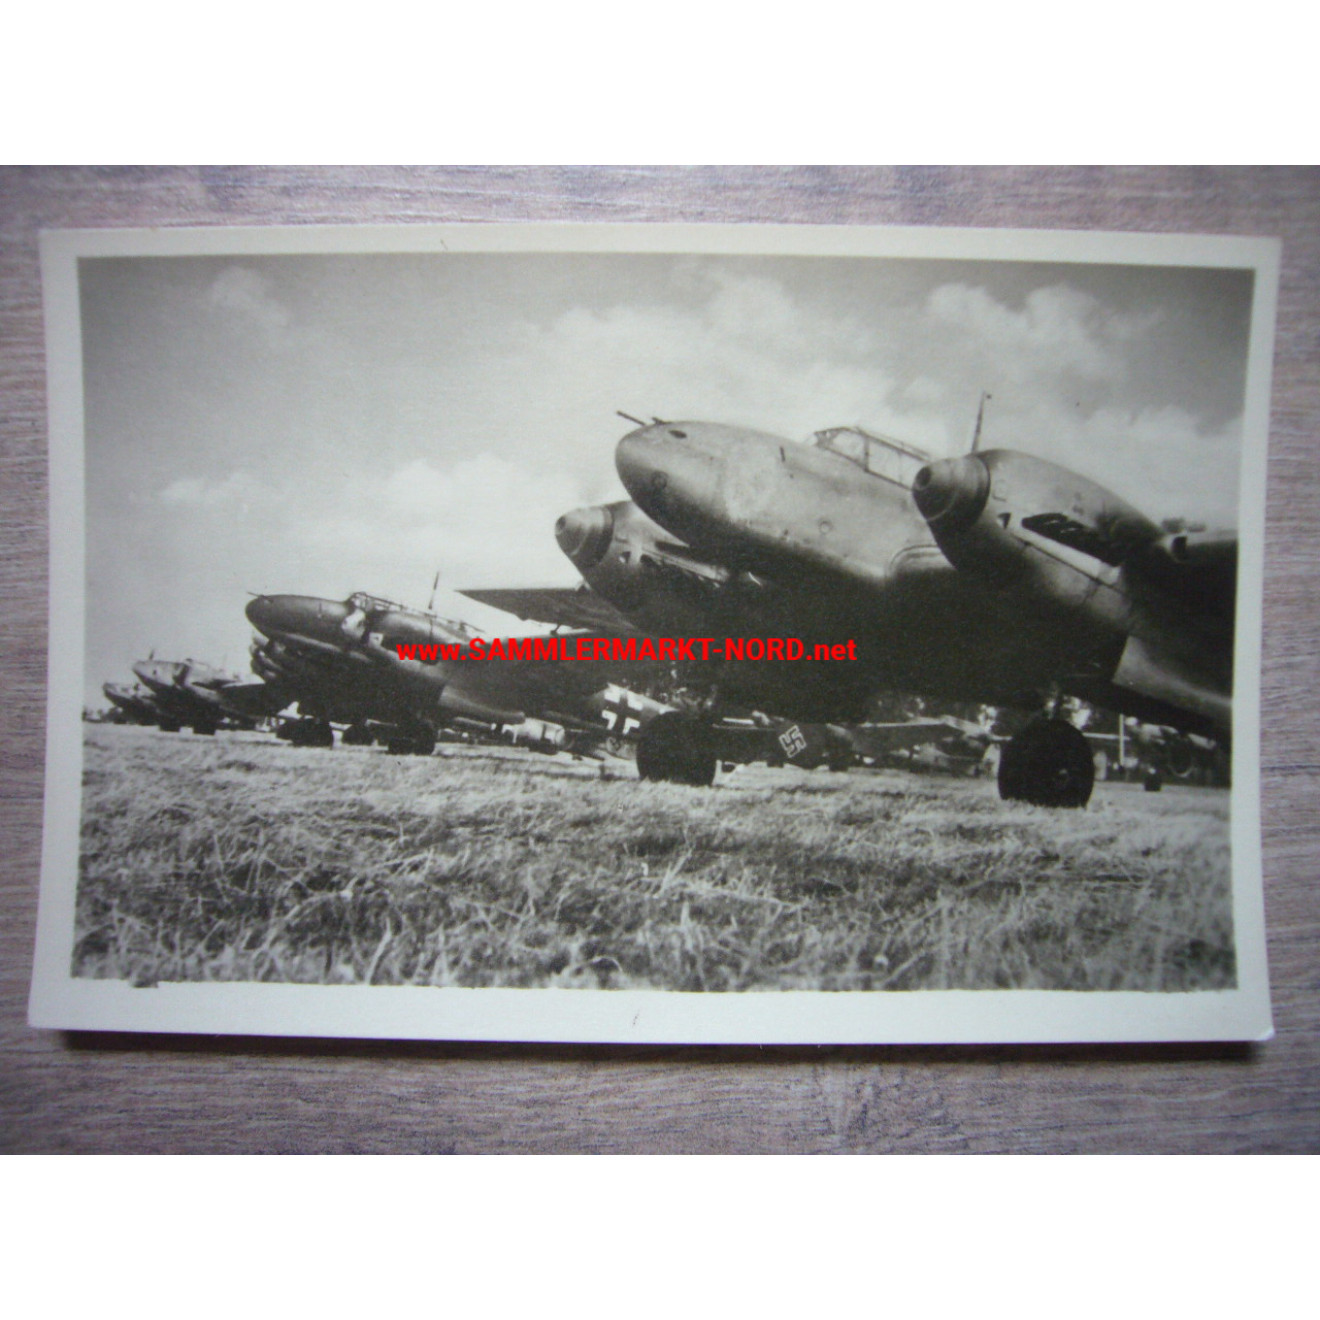 Unsere Luftwaffe - Me 110 "Zerstörer" - Postkarte